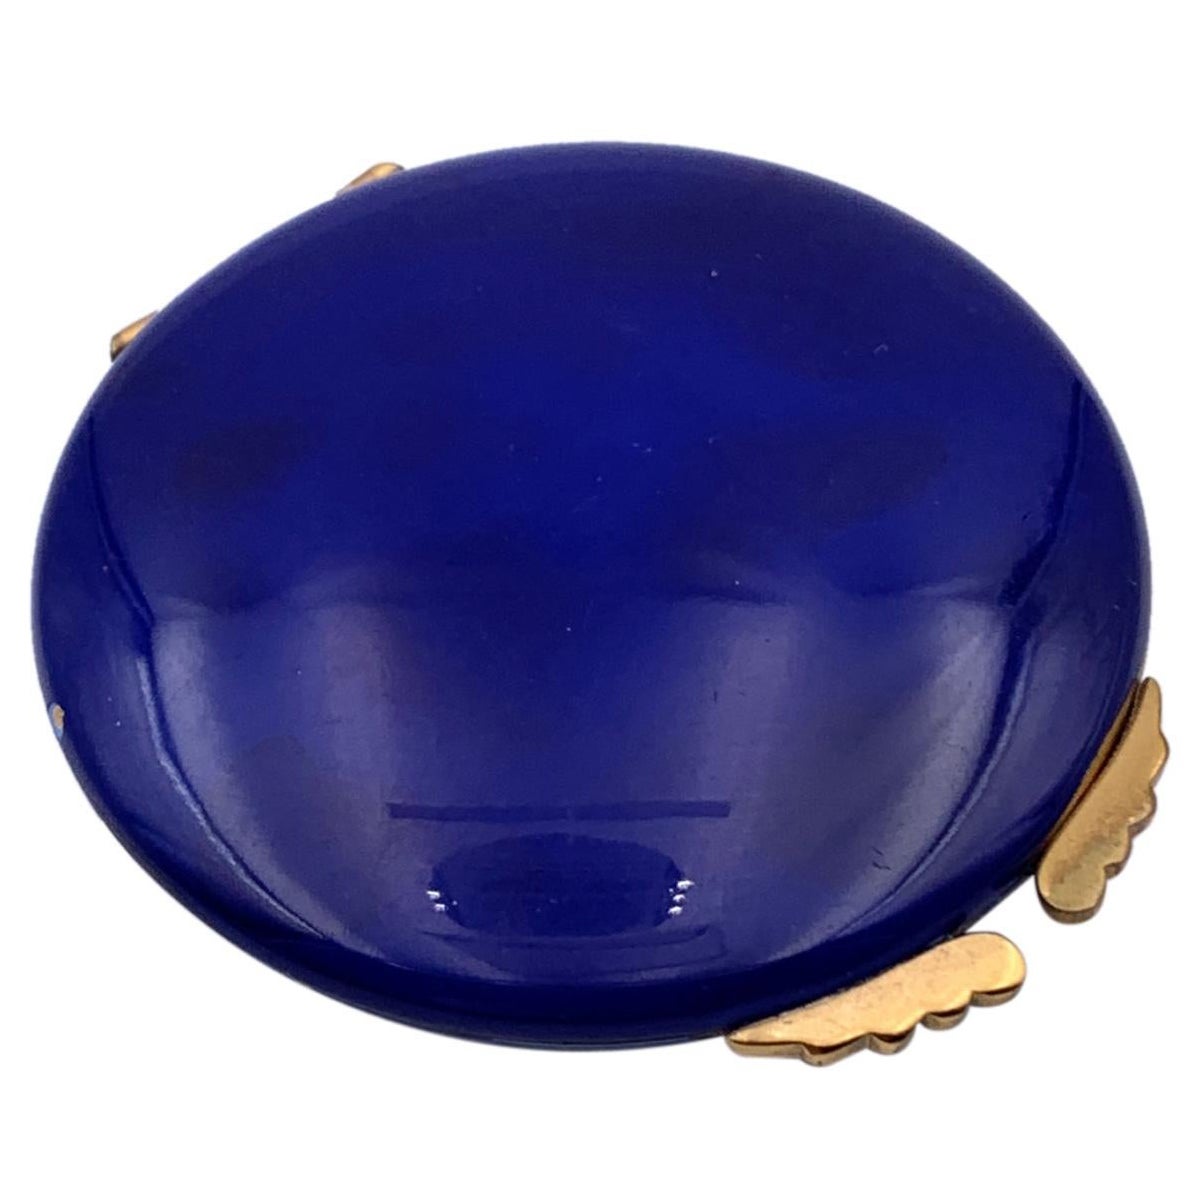 Gucci Vintage Blue Compact Mirror Case Make Up Powder